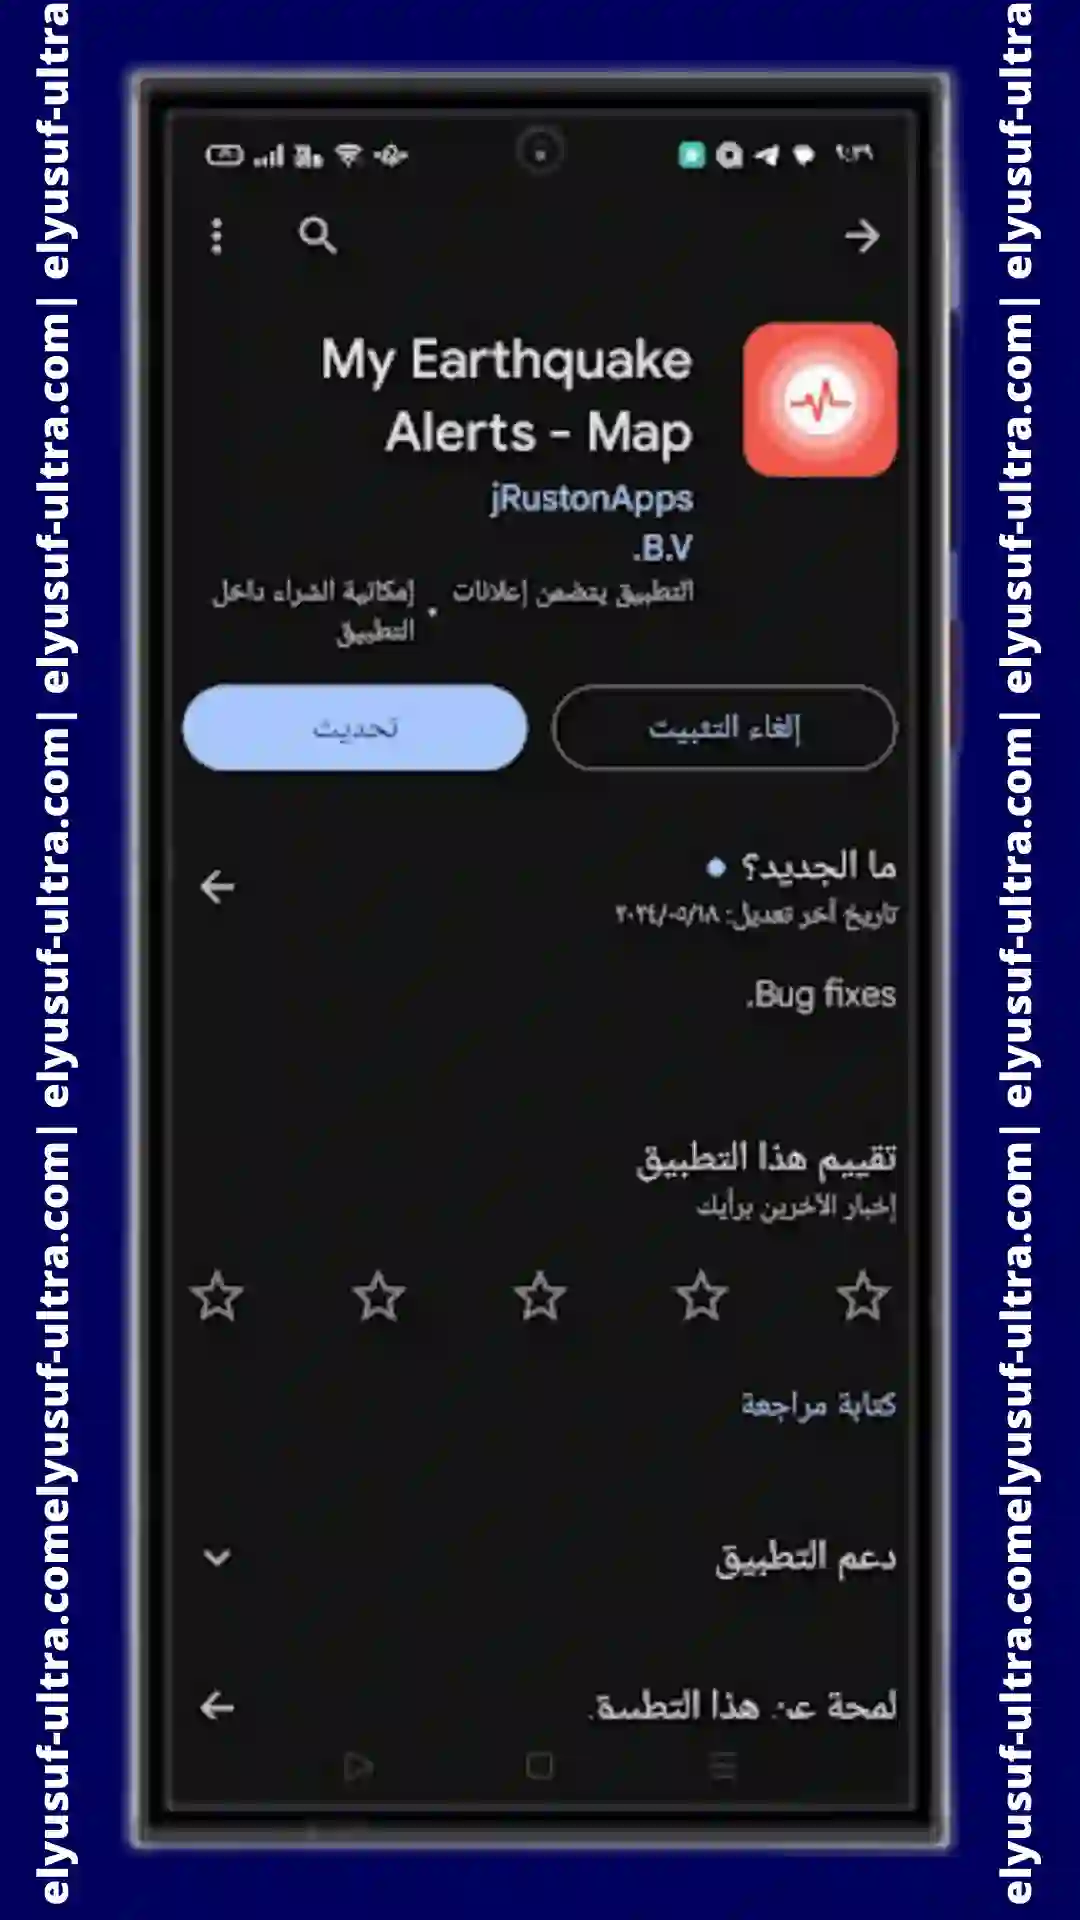  تطبيق My earthquake alerts